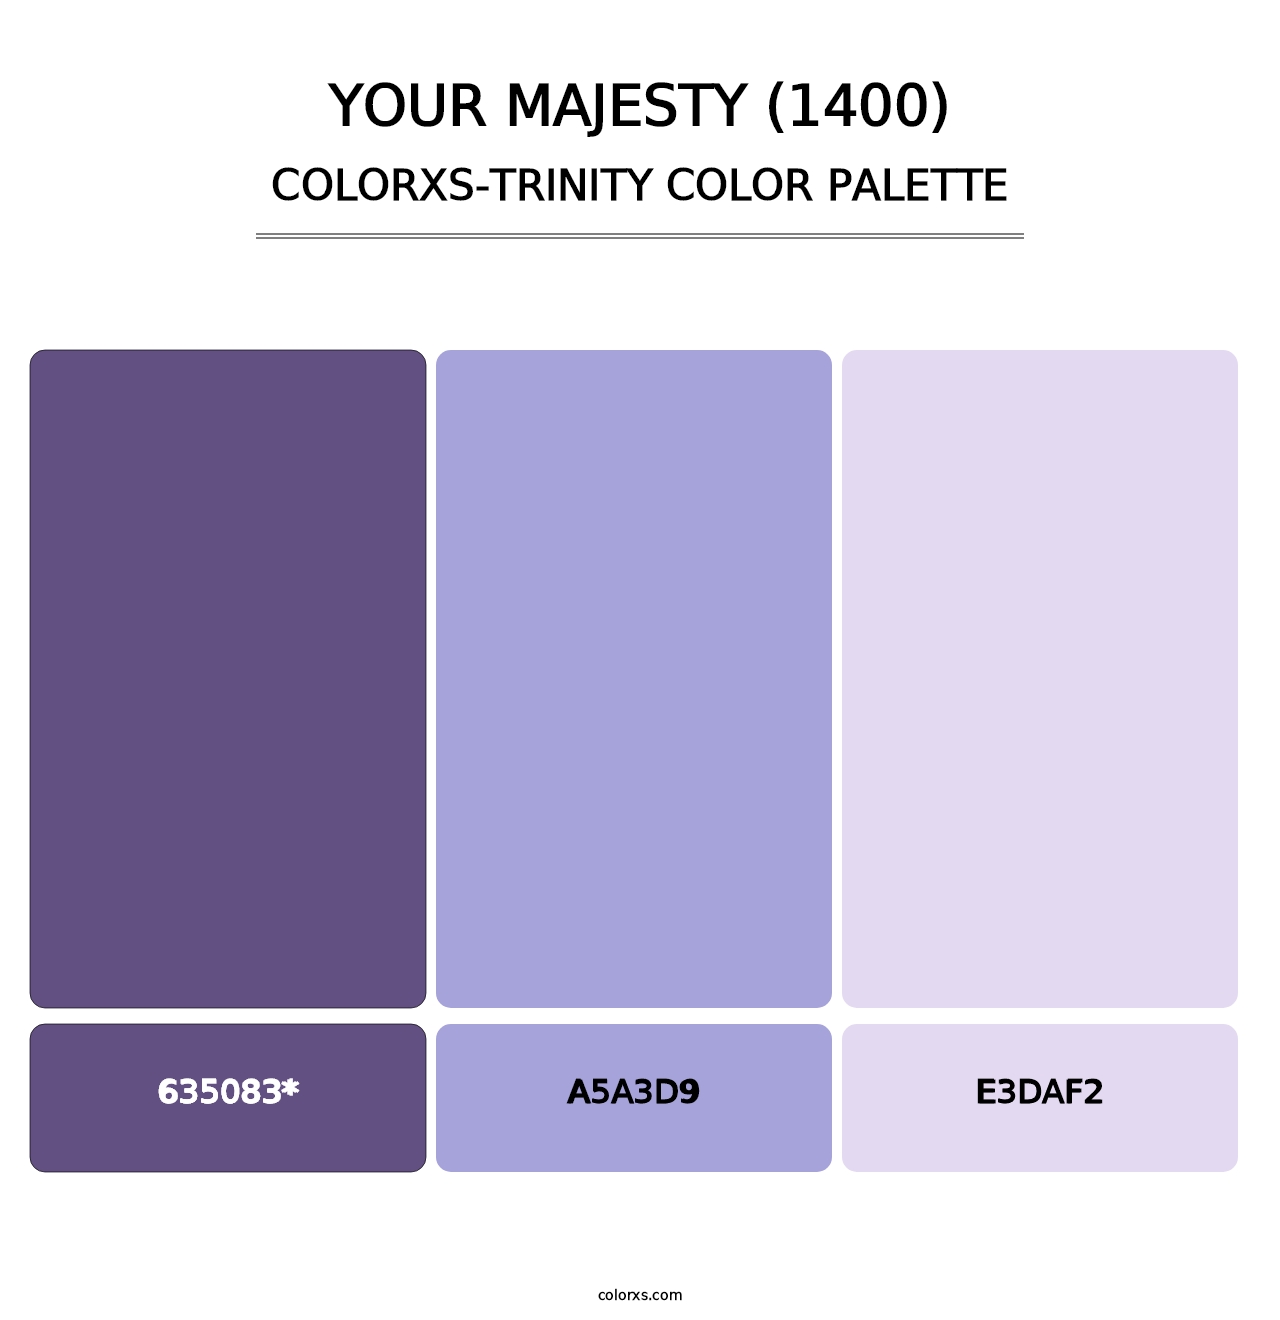 Your Majesty (1400) - Colorxs Trinity Palette